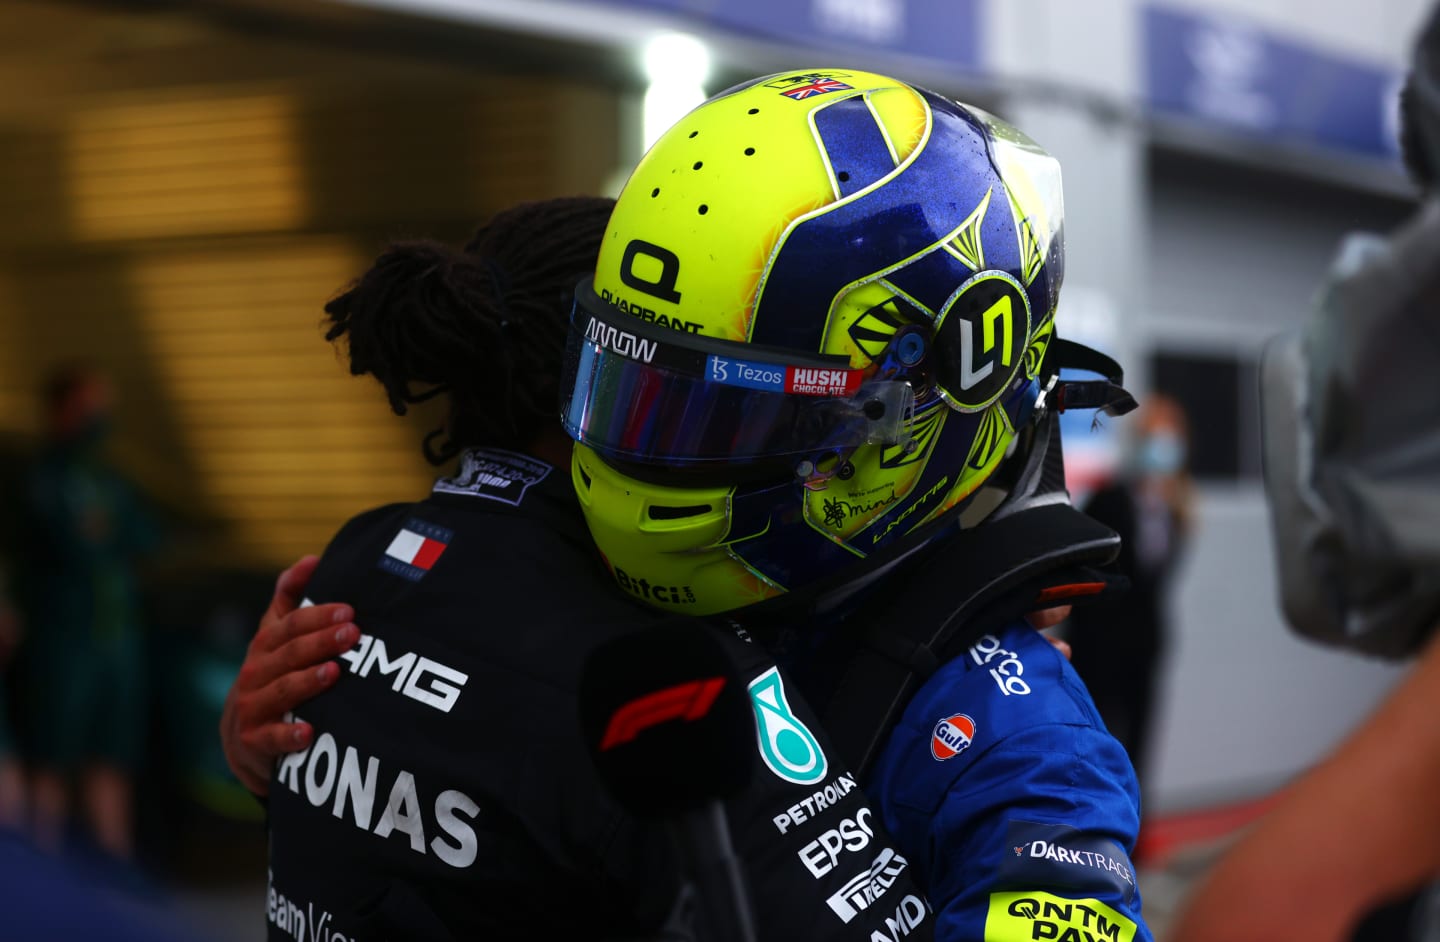 SOCHI, RUSSIA - SEPTEMBER 26: Race winner Lewis Hamilton of Great Britain and Mercedes GP hugs